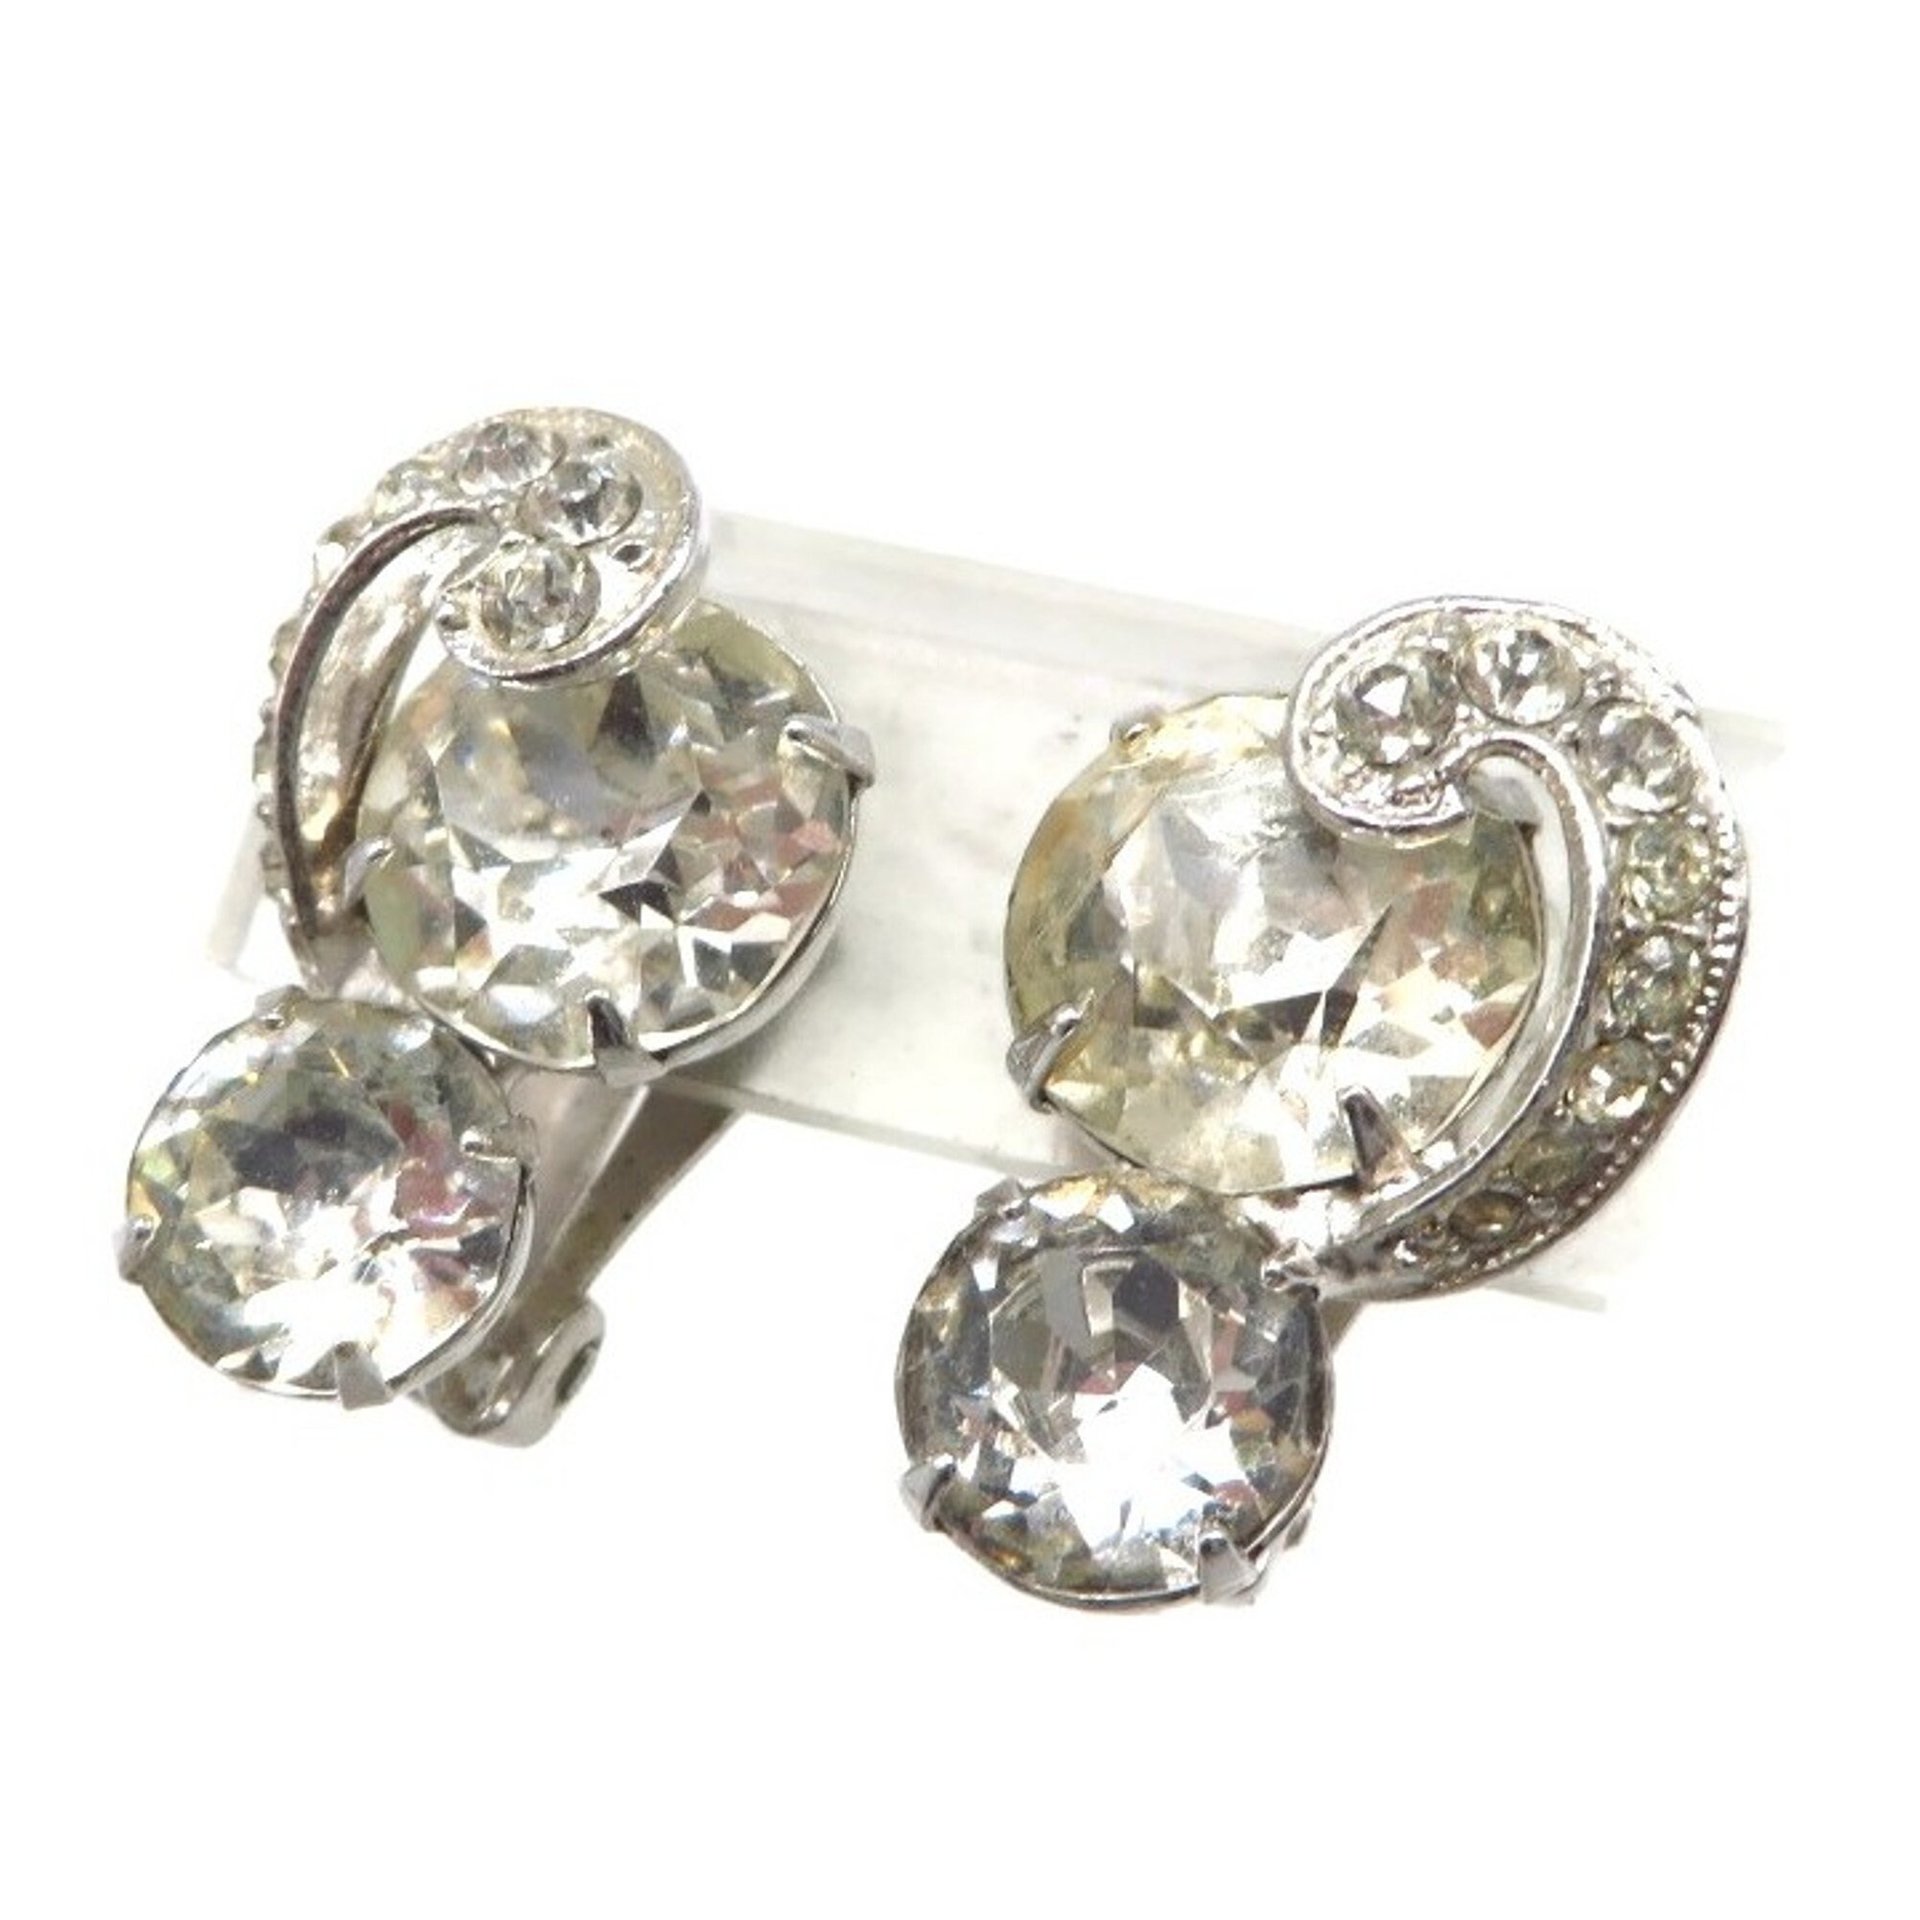 Eisenberg Silver Tone Rhinestone Clip-on Earrings,  Vintage Bridal Jewelry